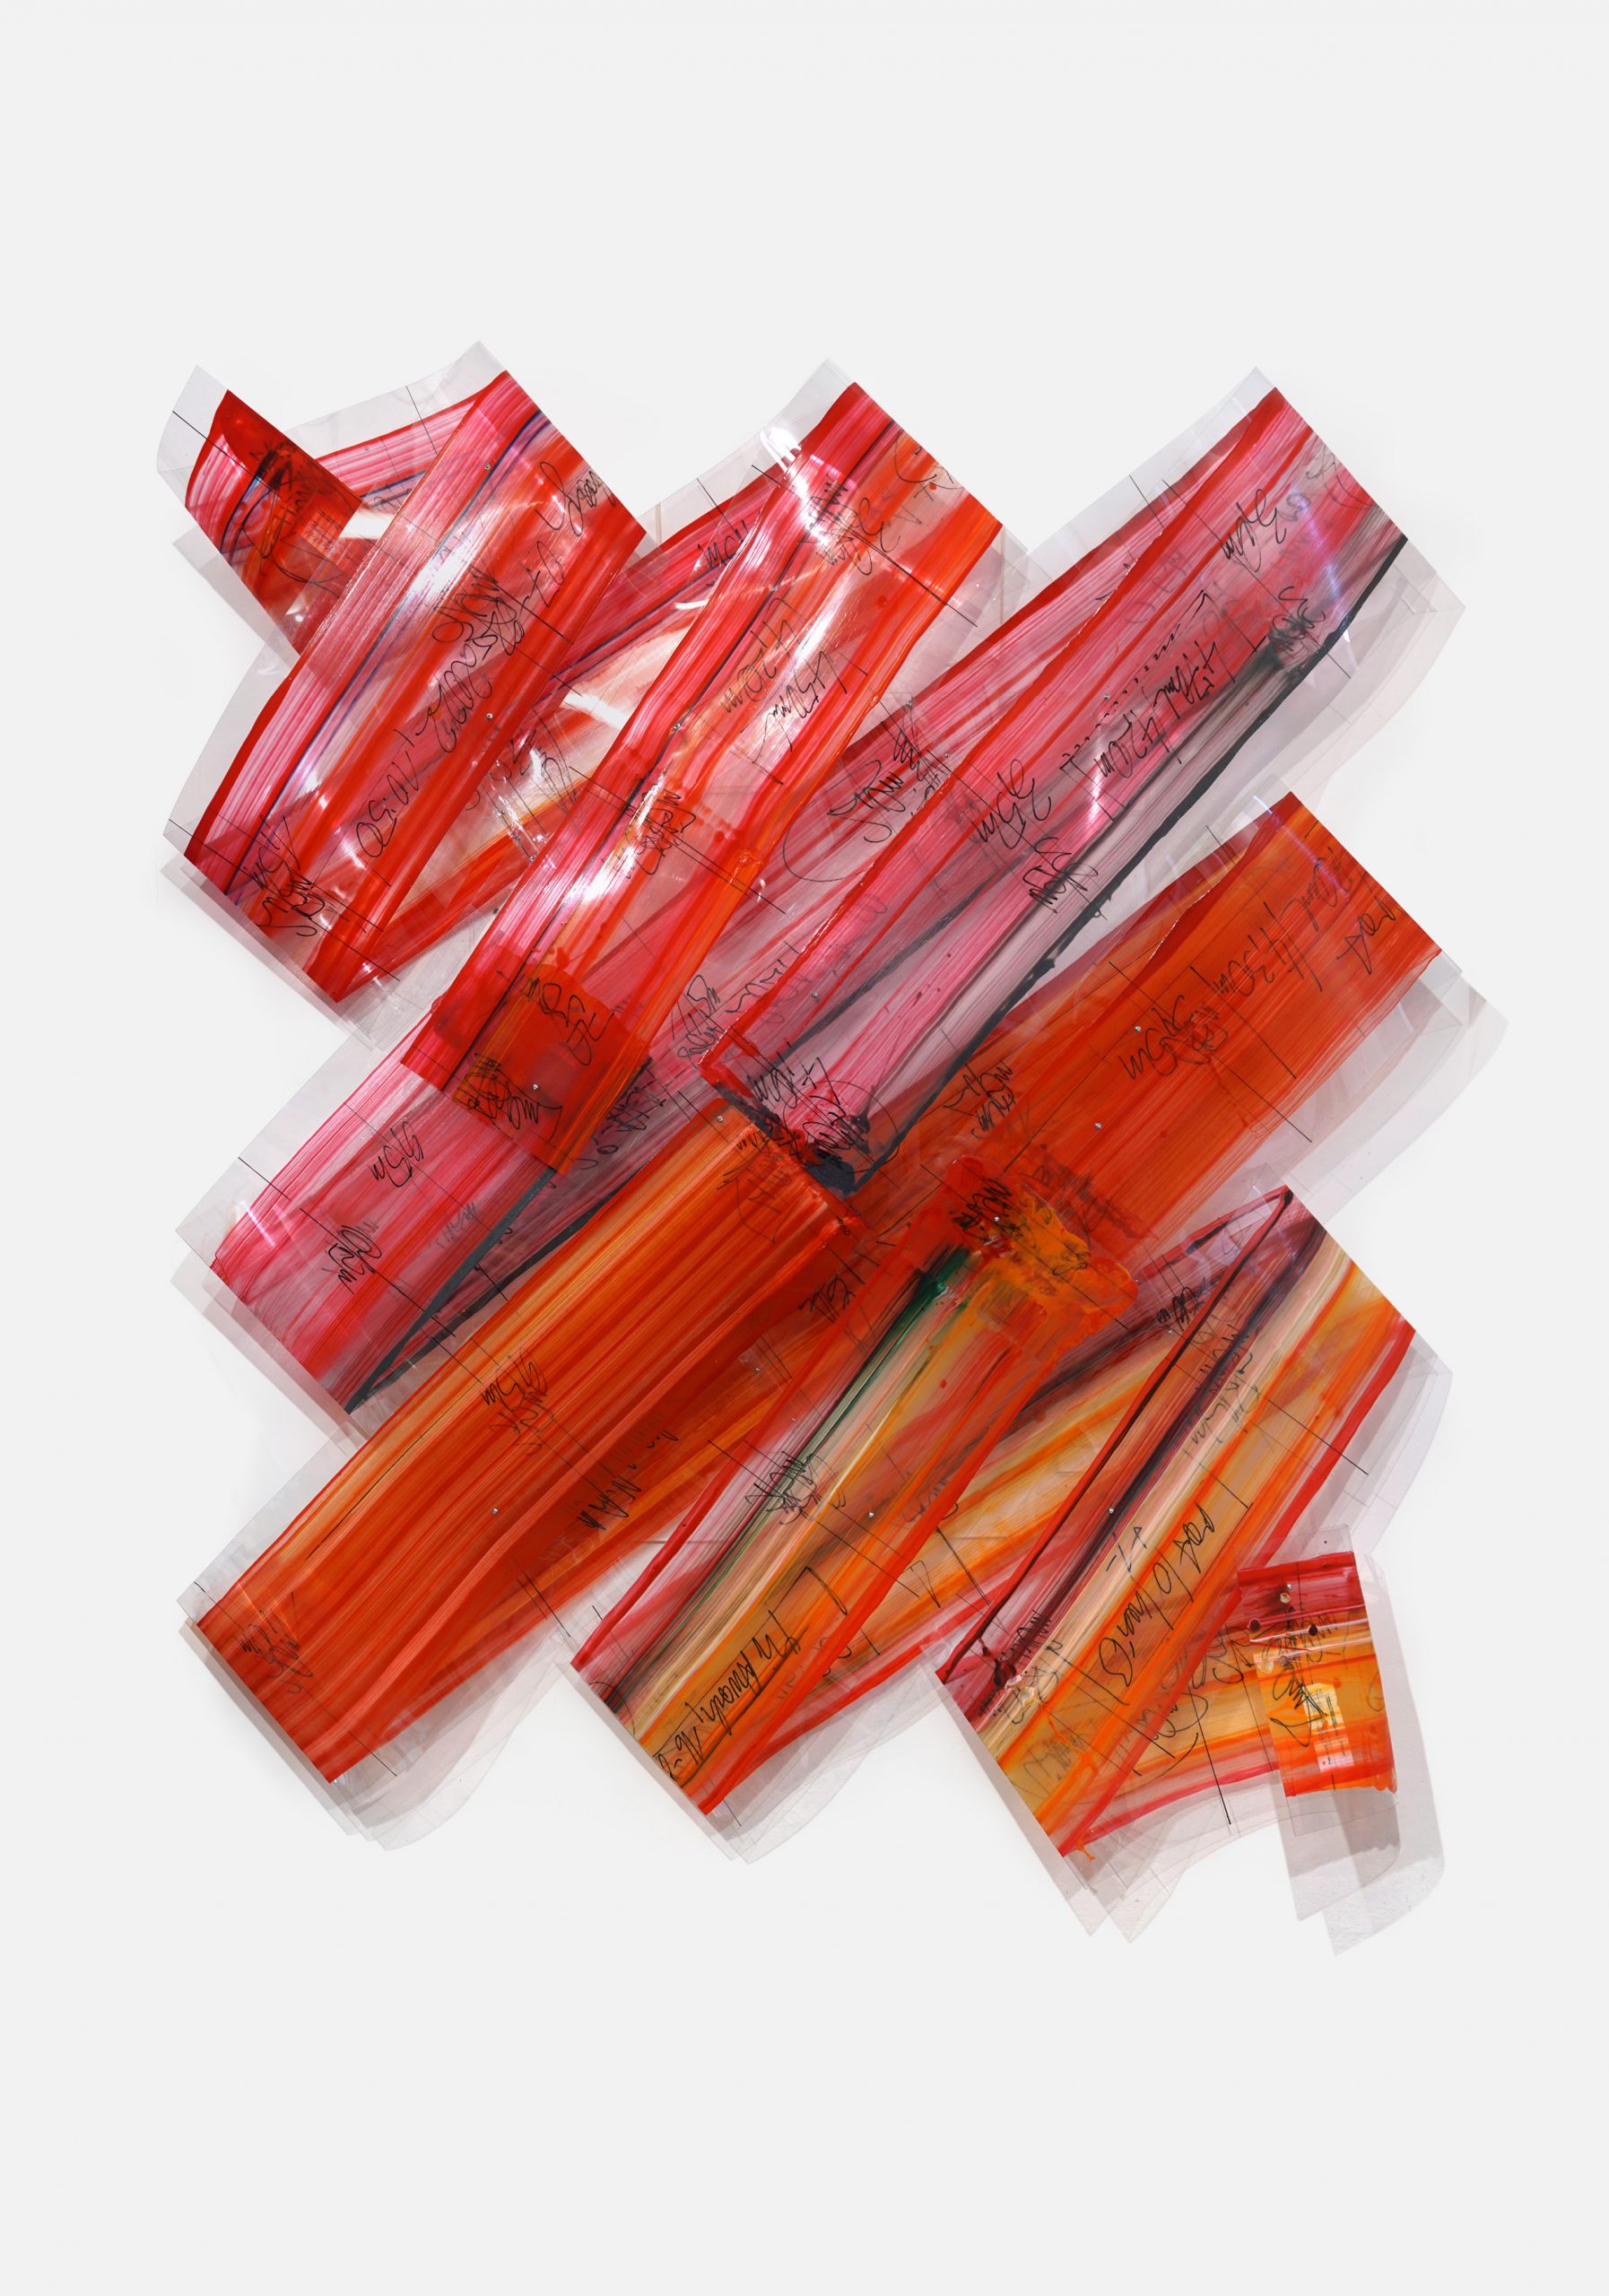 Joseph Marsteurer: „05_23“, 2023, Acryl auf Acrylglas, 220 x 200 x 30 cm